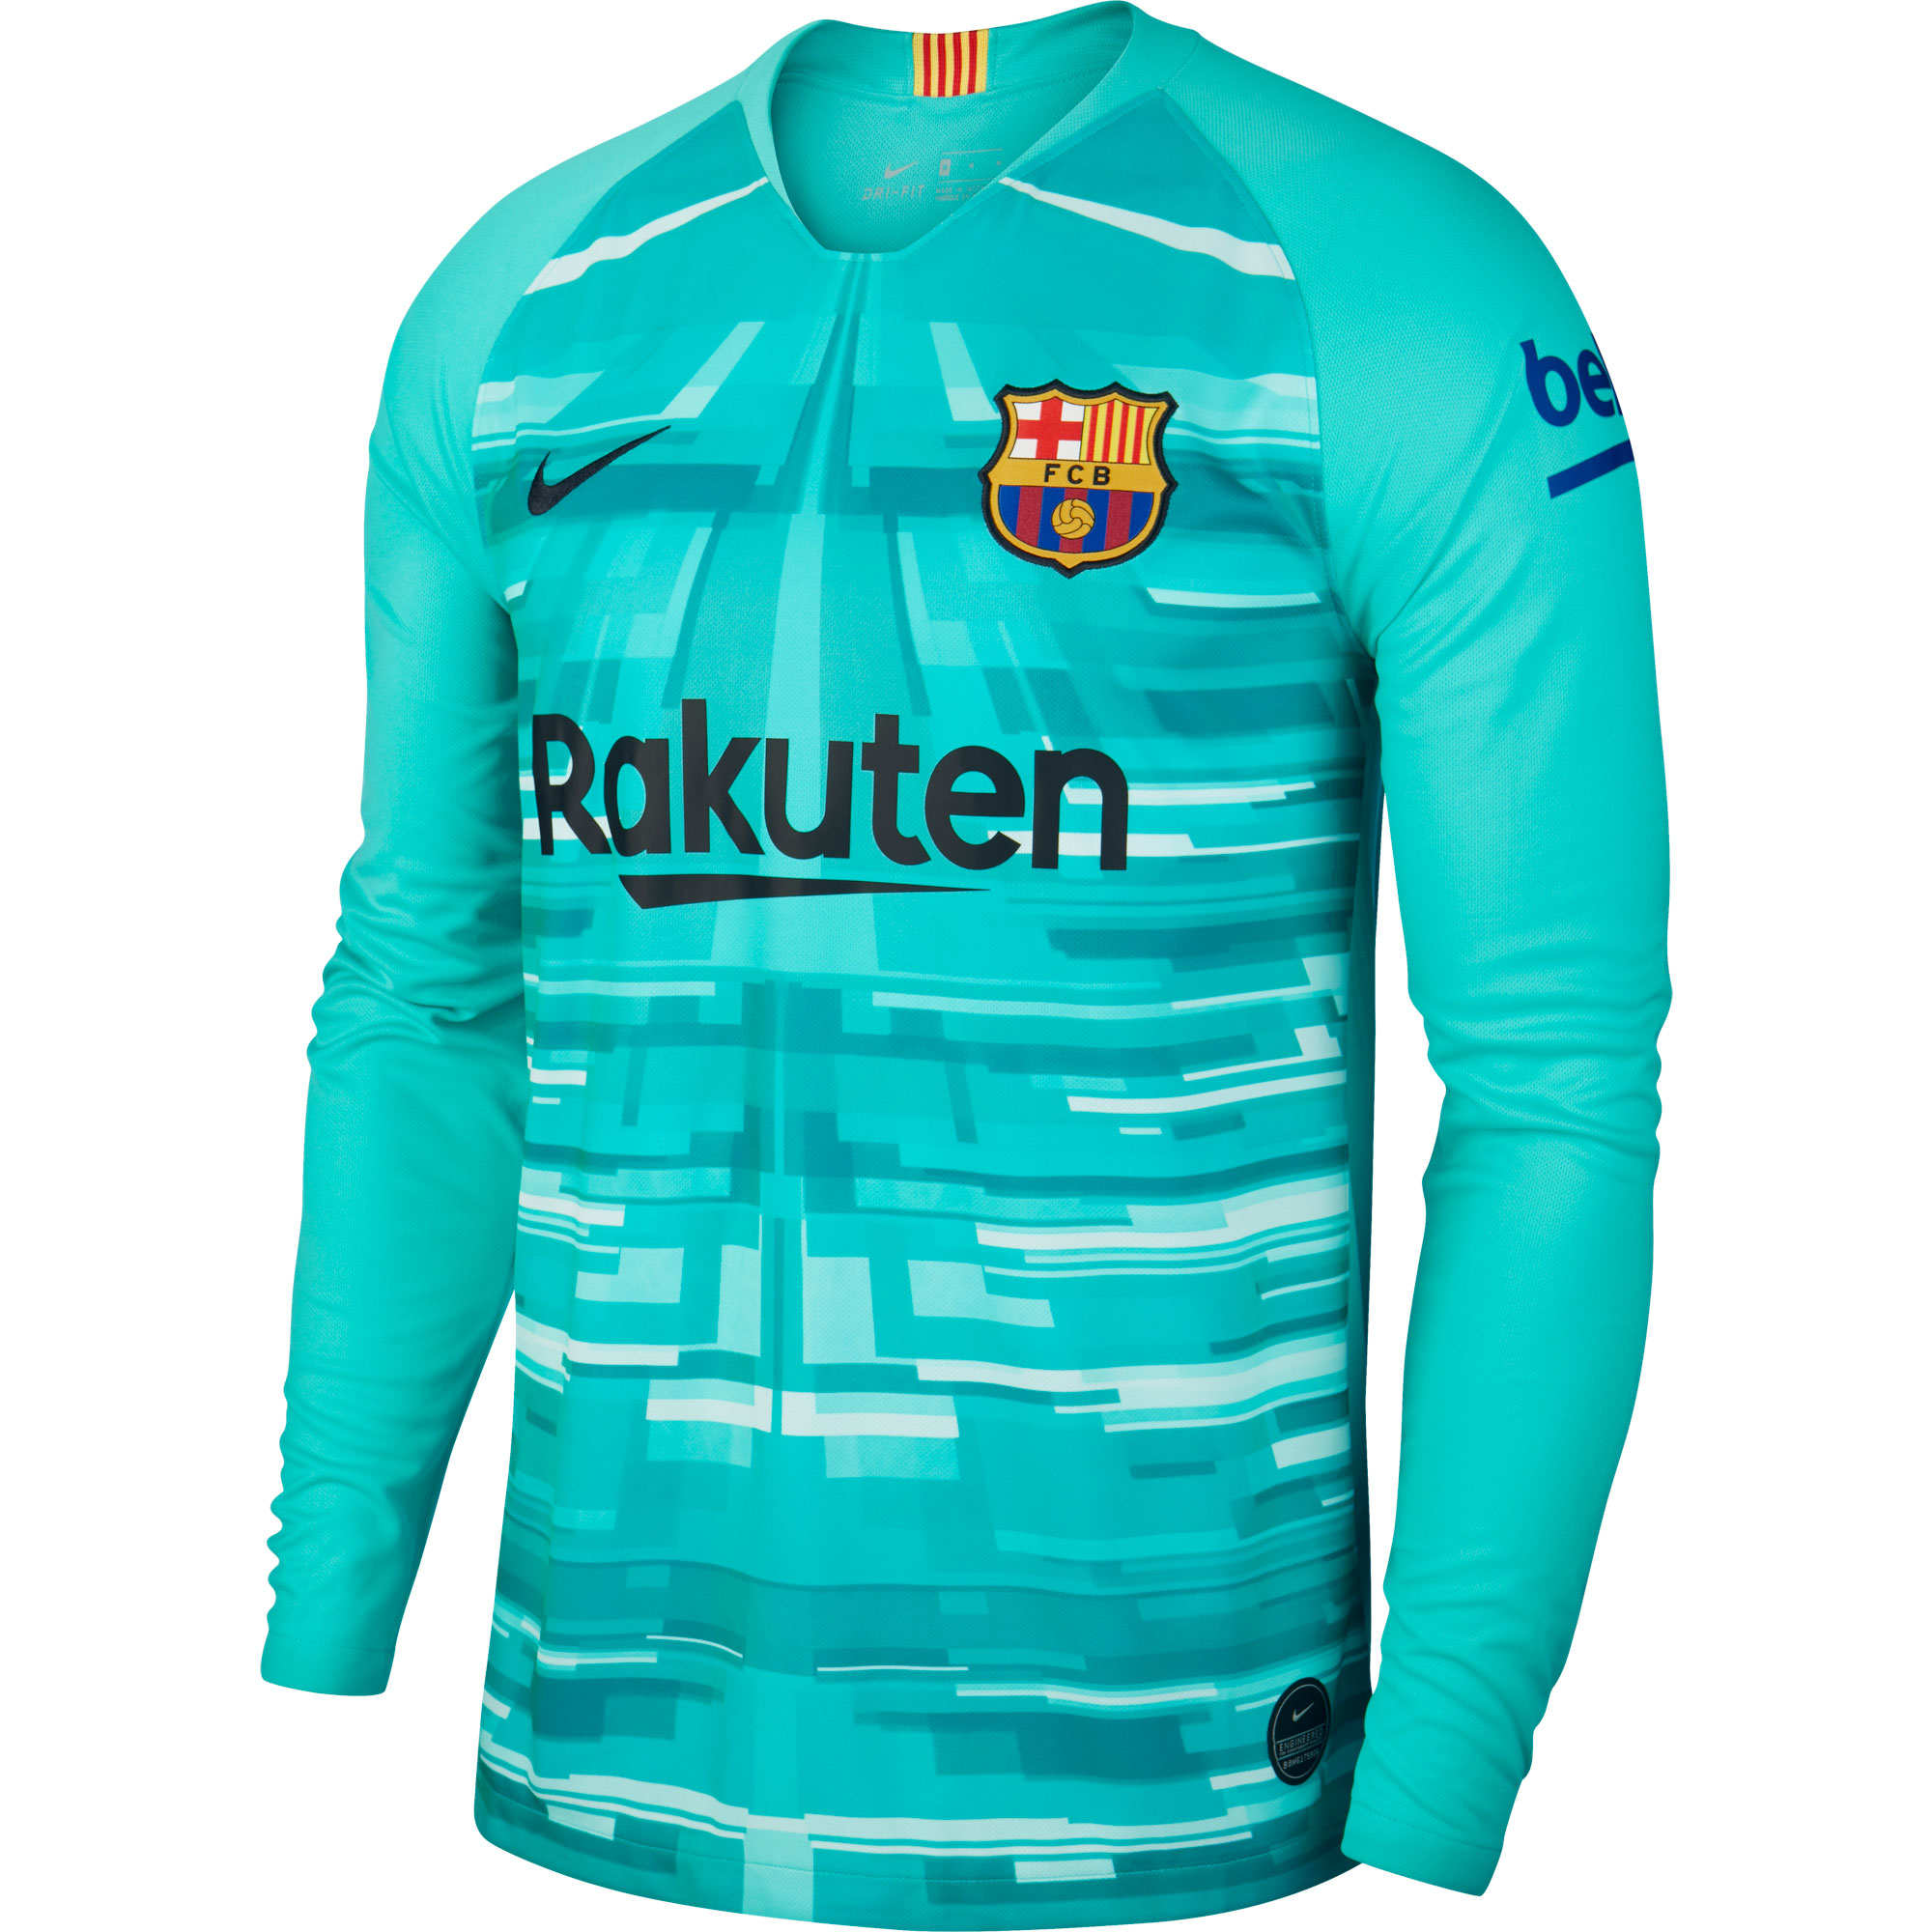 Dafbebe617 Fc Barcelona 17 18 Goalkeeper Green Shirt Ter Stegen Ls Izmirhabergazetesi Com - camisa do barcelona roblox